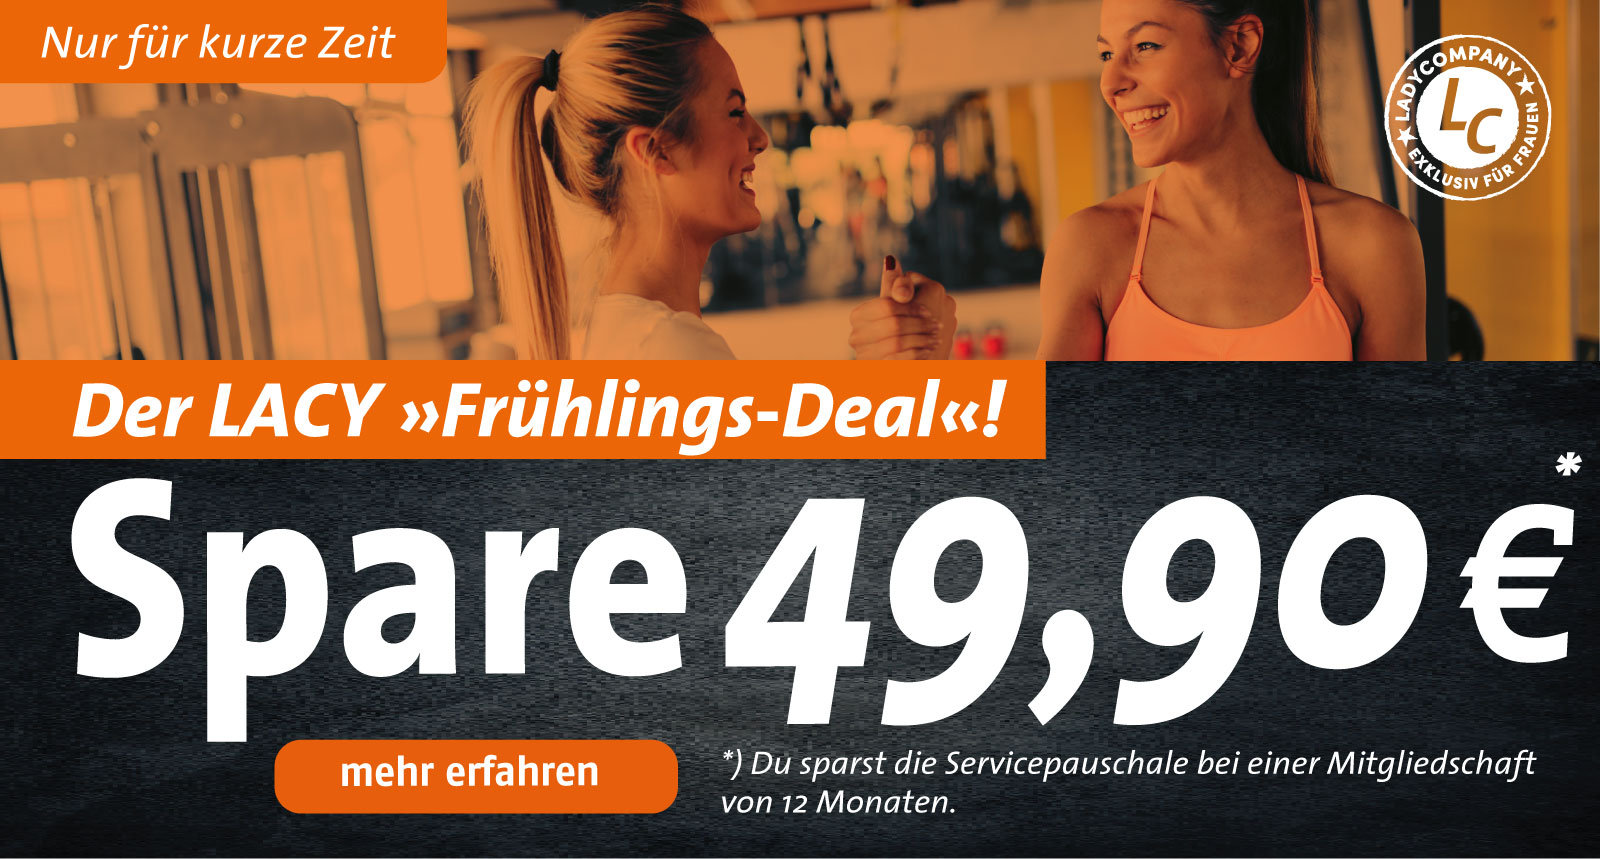 Ladycompany - Frühlingsdeal - 49,90 EUR sparen!